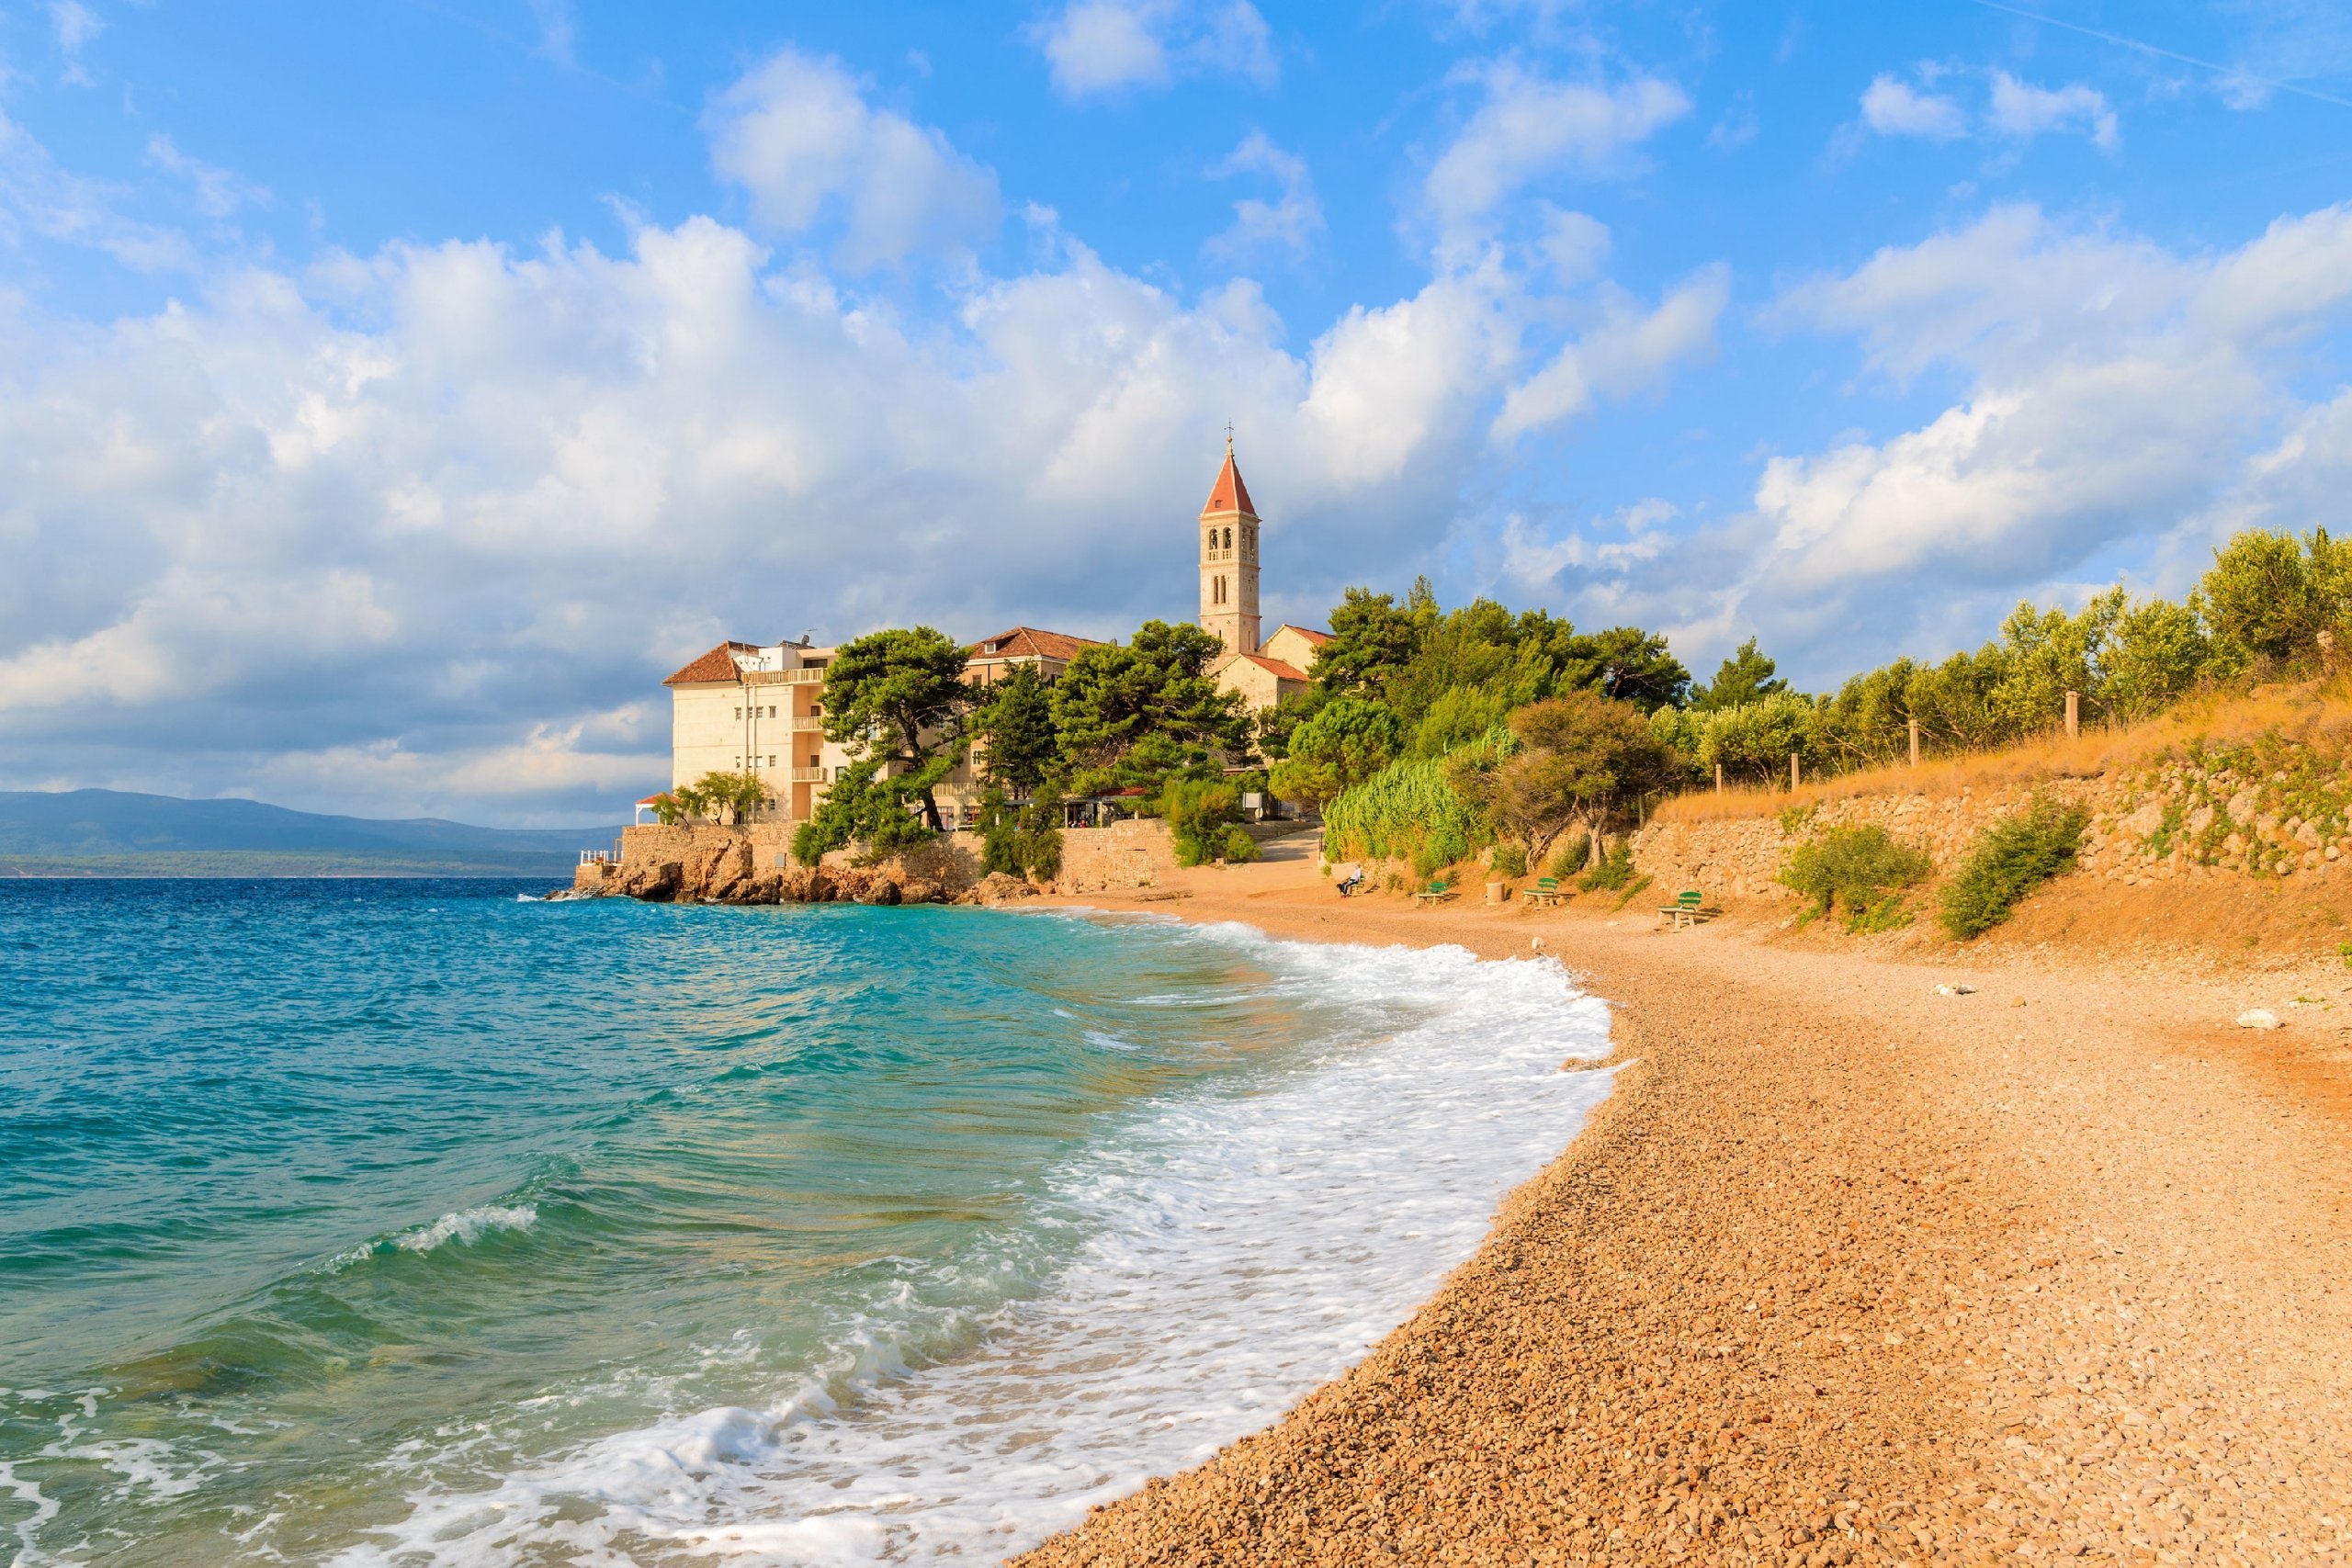 Croatia: The Dalmatian Islands
